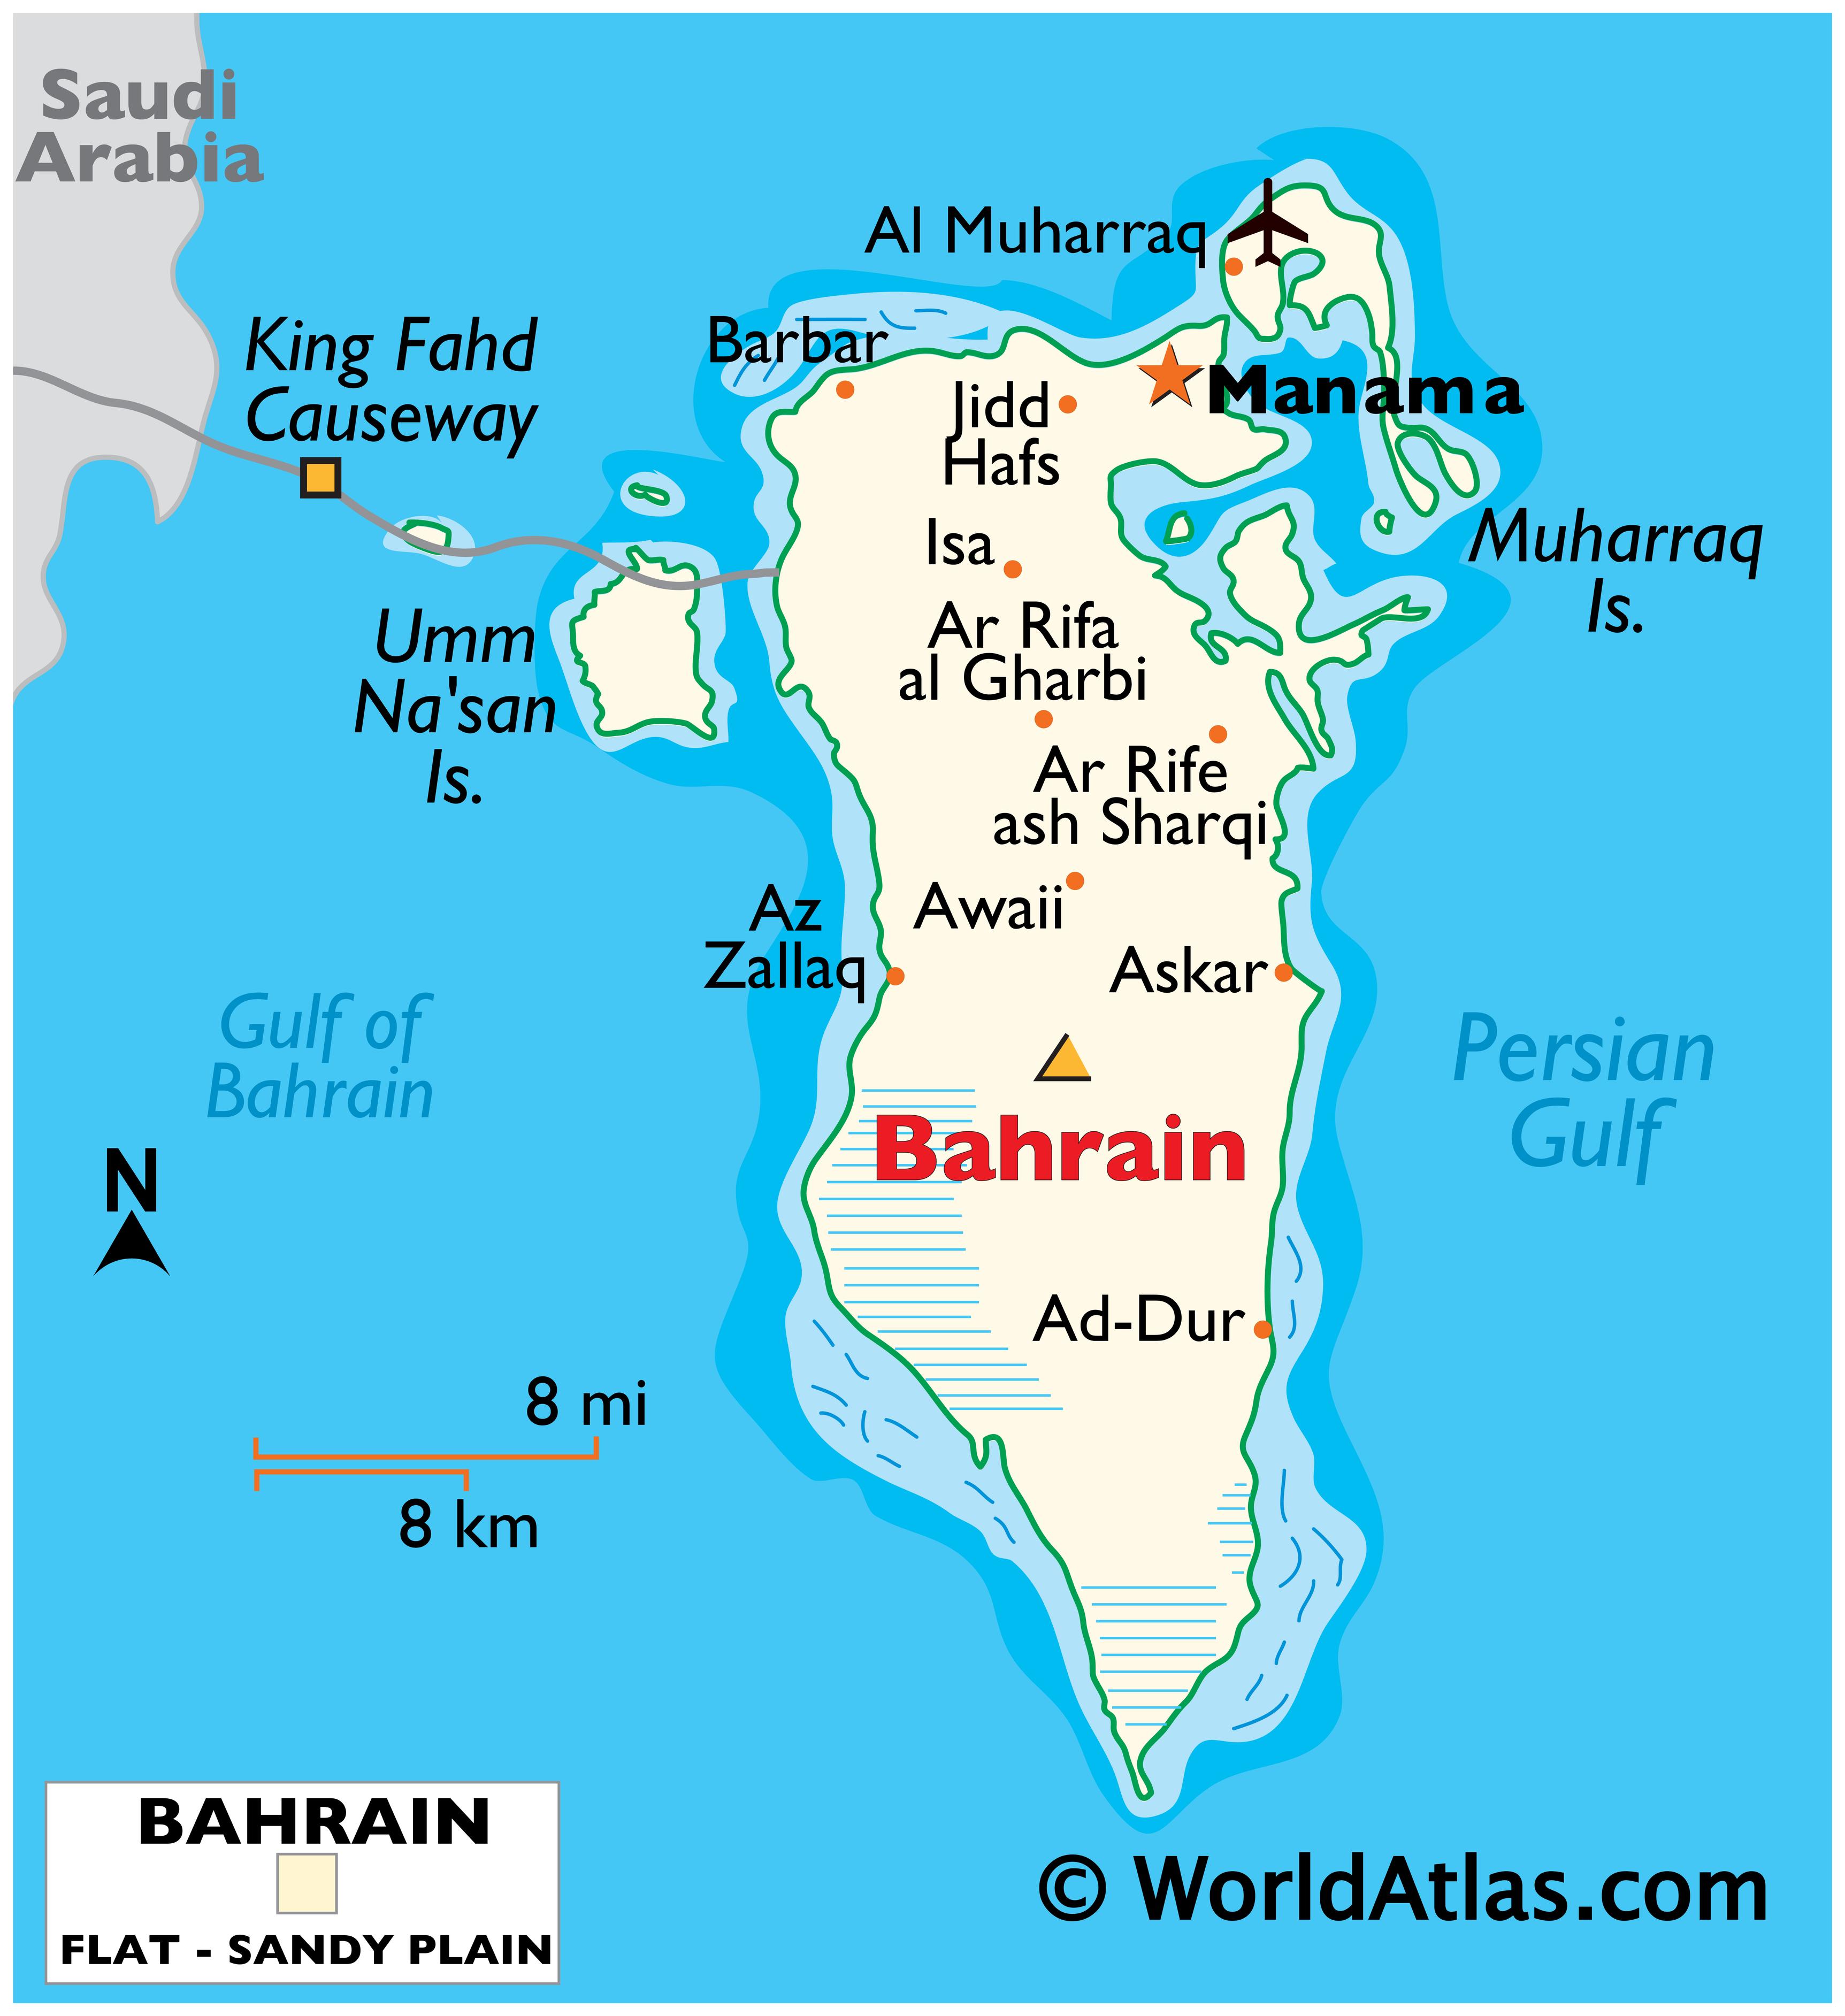 Bahrain Map / Geography of Bahrain / Map of Bahrain - Worldatlas.com